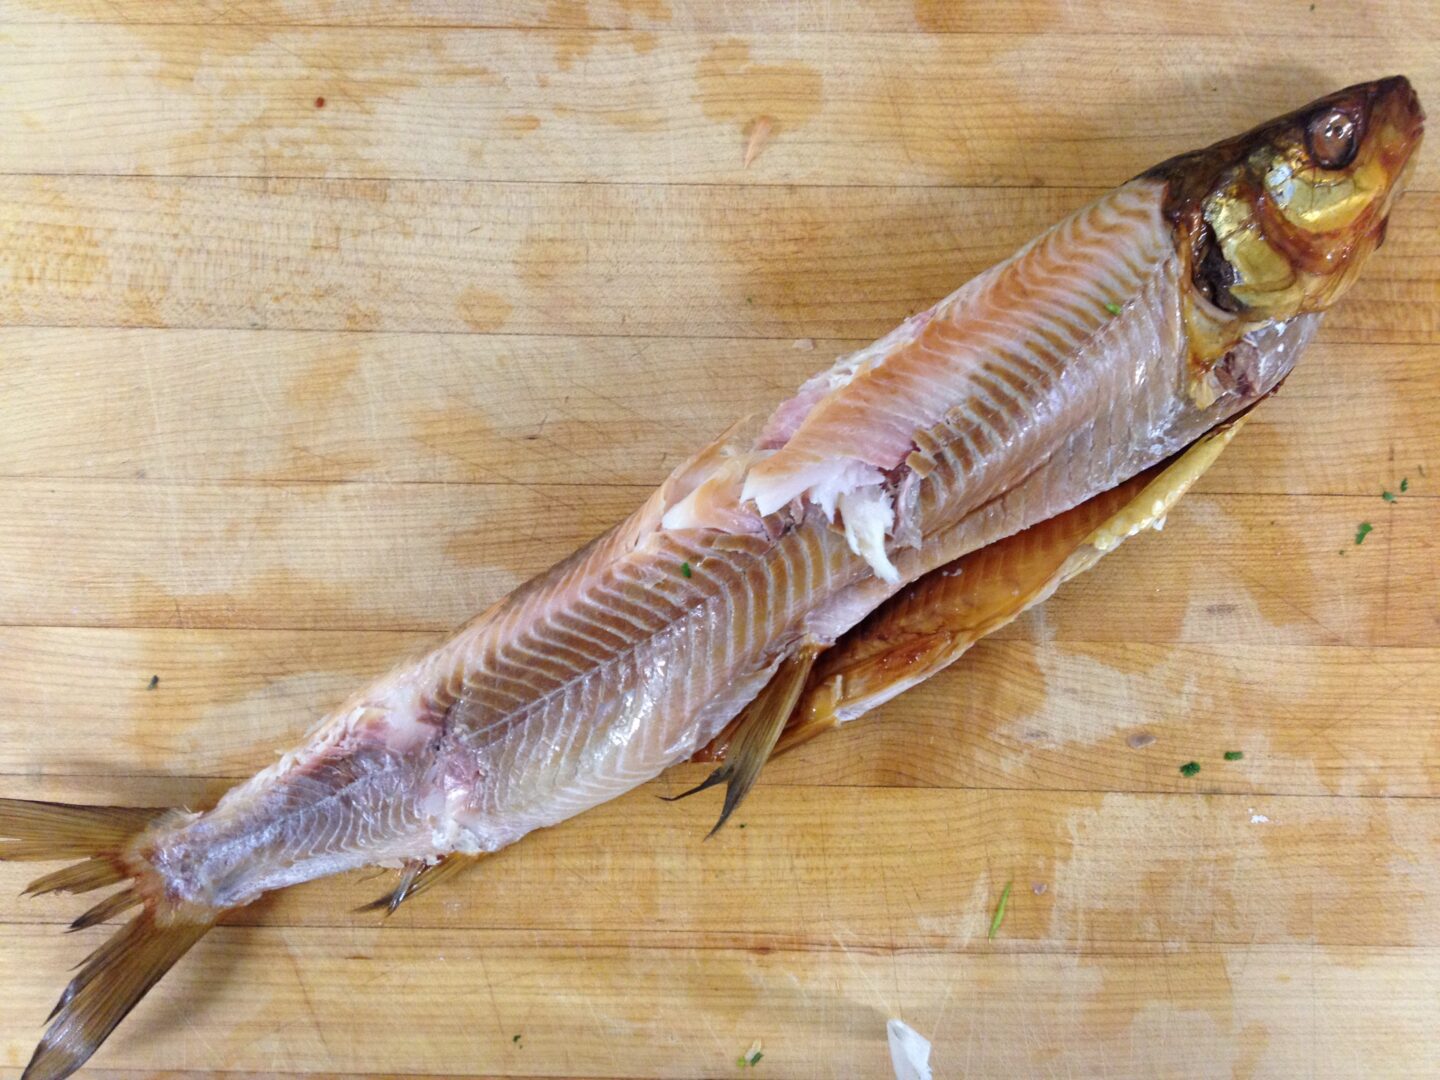 A fish is sitting on a cutting board.